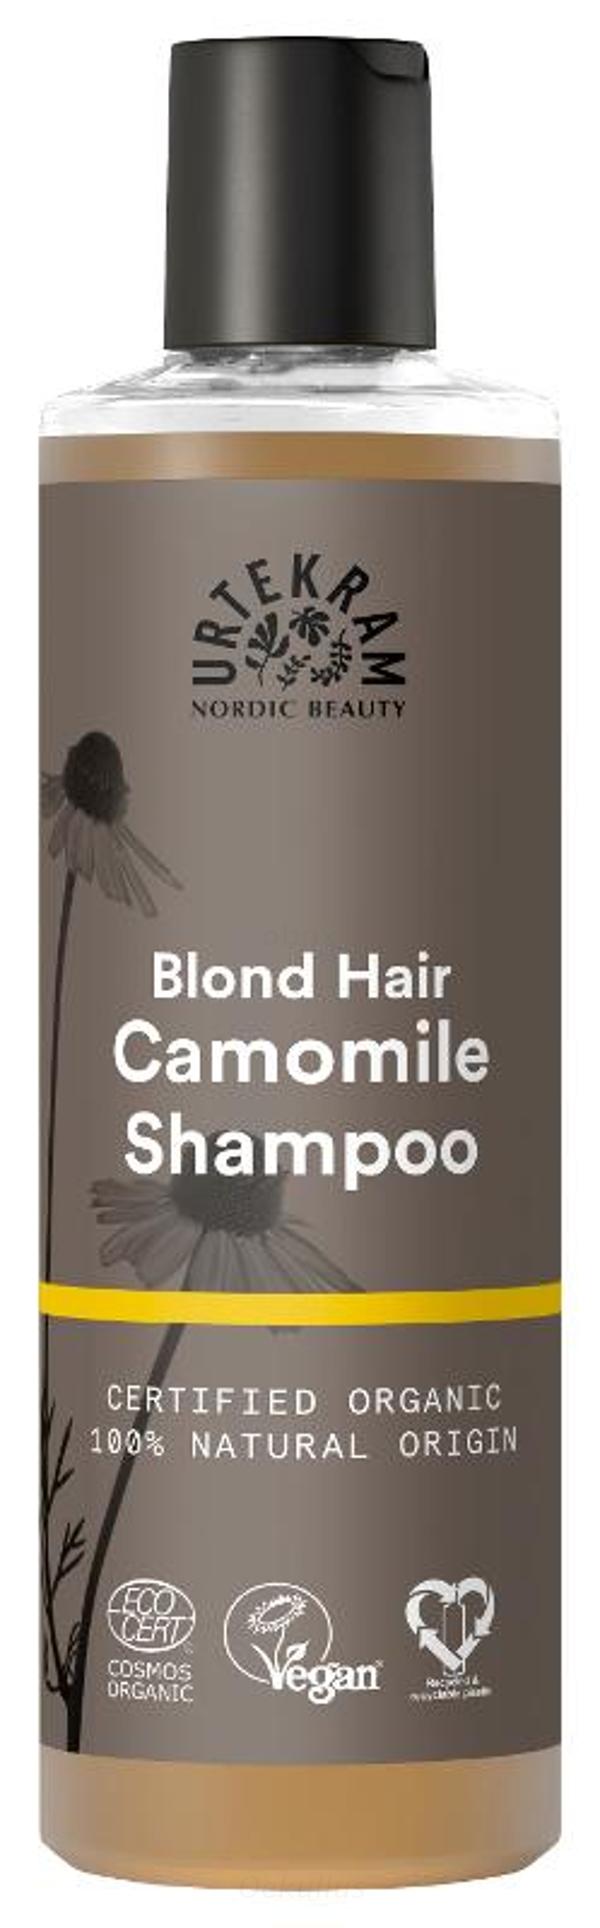 Produktfoto zu Kamille Shampoo